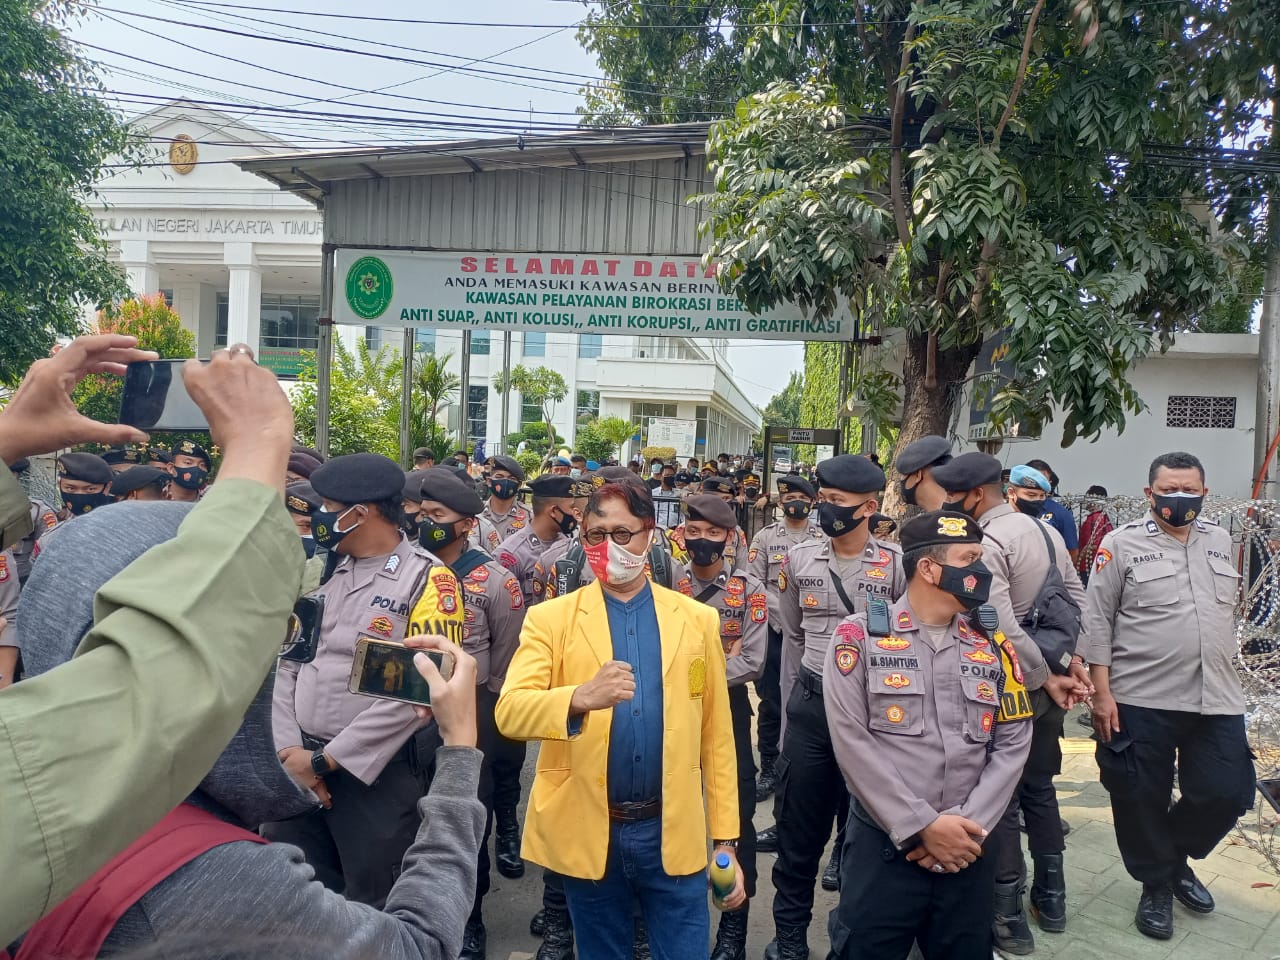 Pria Jaket Kuning Berlogo UI Protes Soal Kawat Berduri di Pengadilan Rizieq Shihab